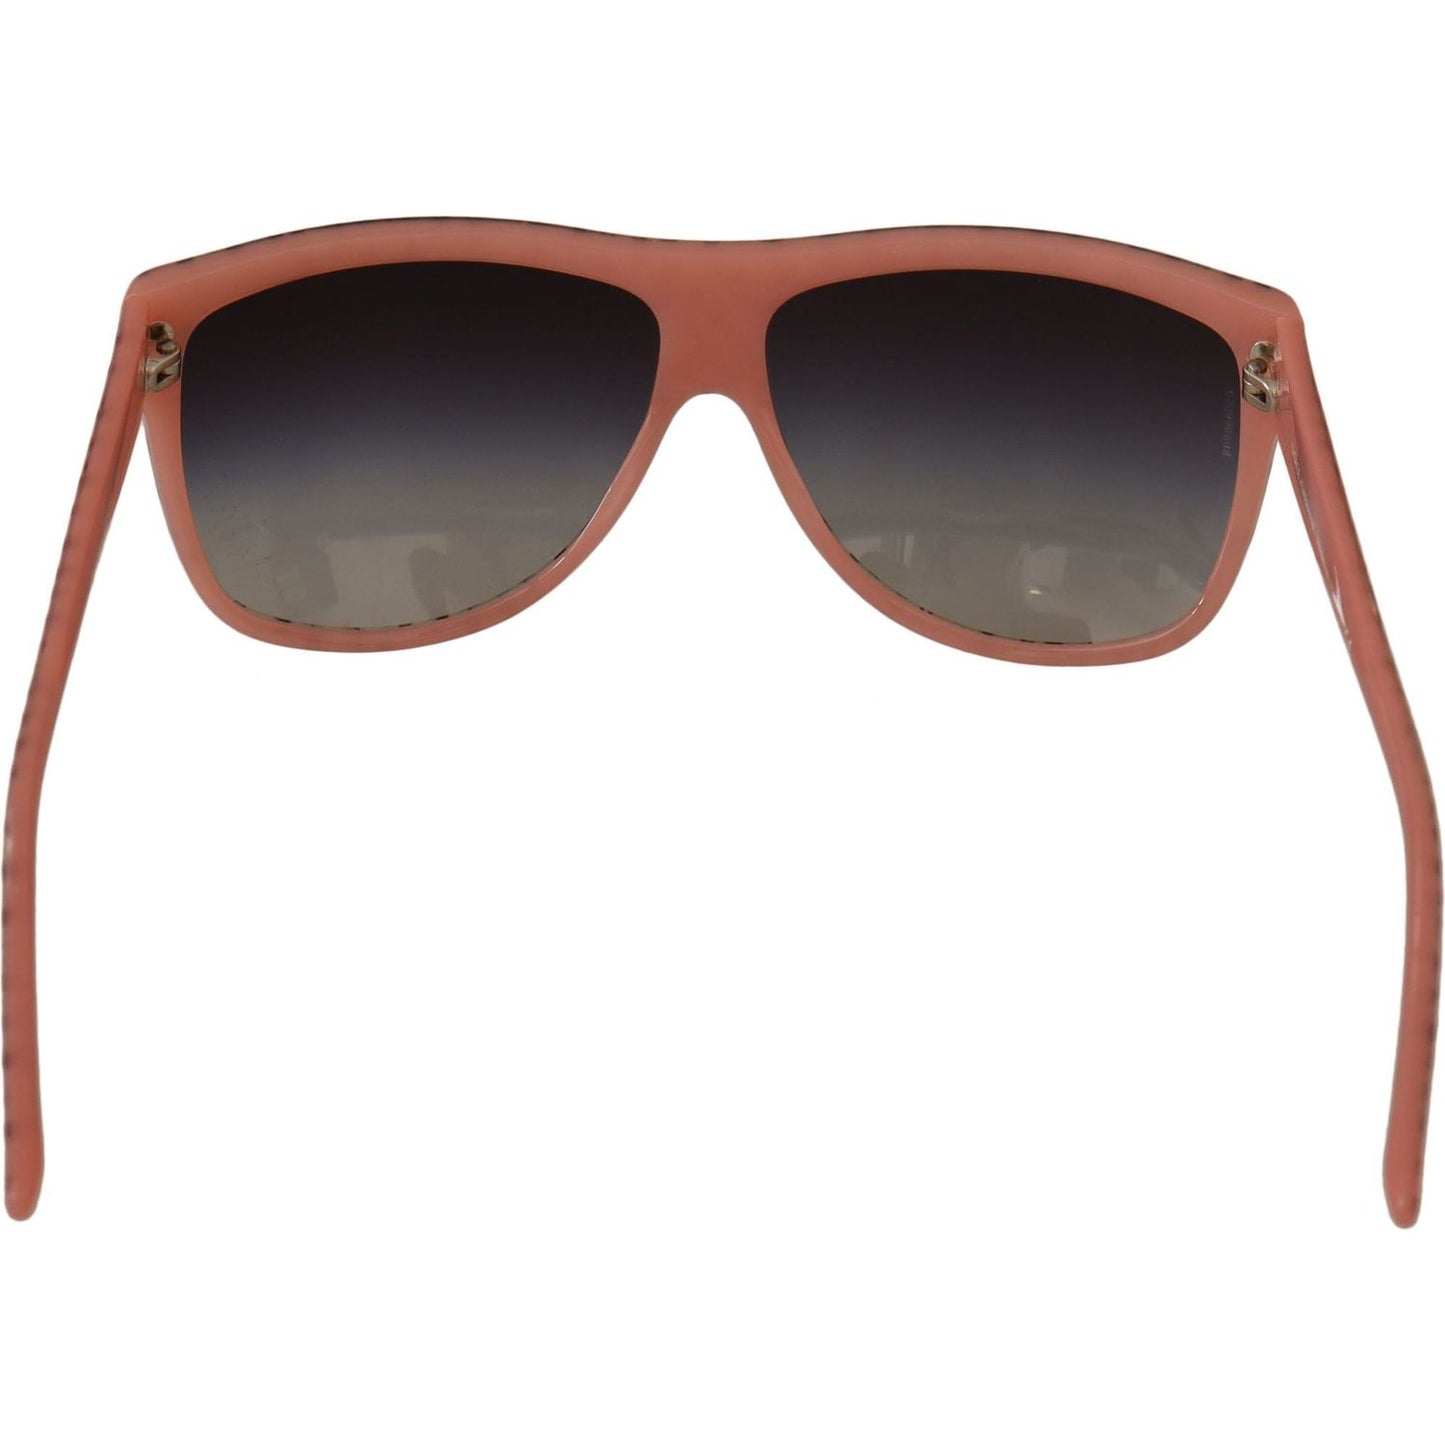 Dolce & Gabbana | Brown Stars Acetate Frame Women Shades Sunglasses WOMAN SUNGLASSES | McRichard Designer Brands